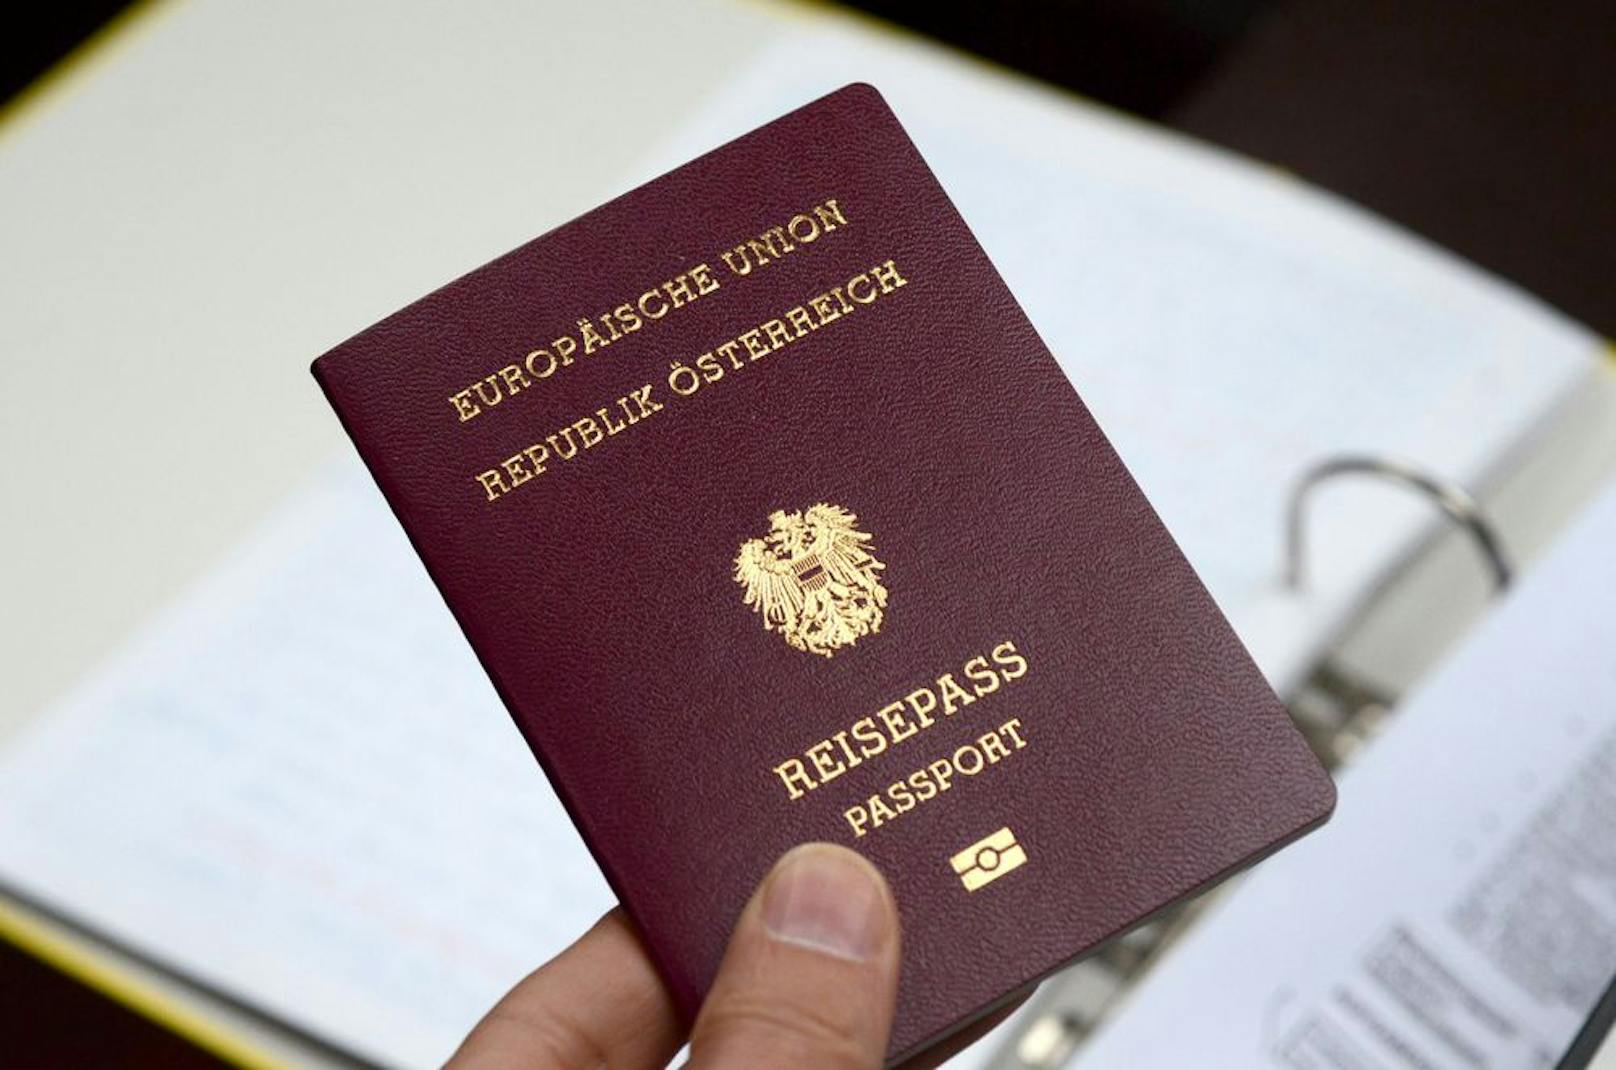 Viele Wiener Migranten wollen Staatsbürgerschaft